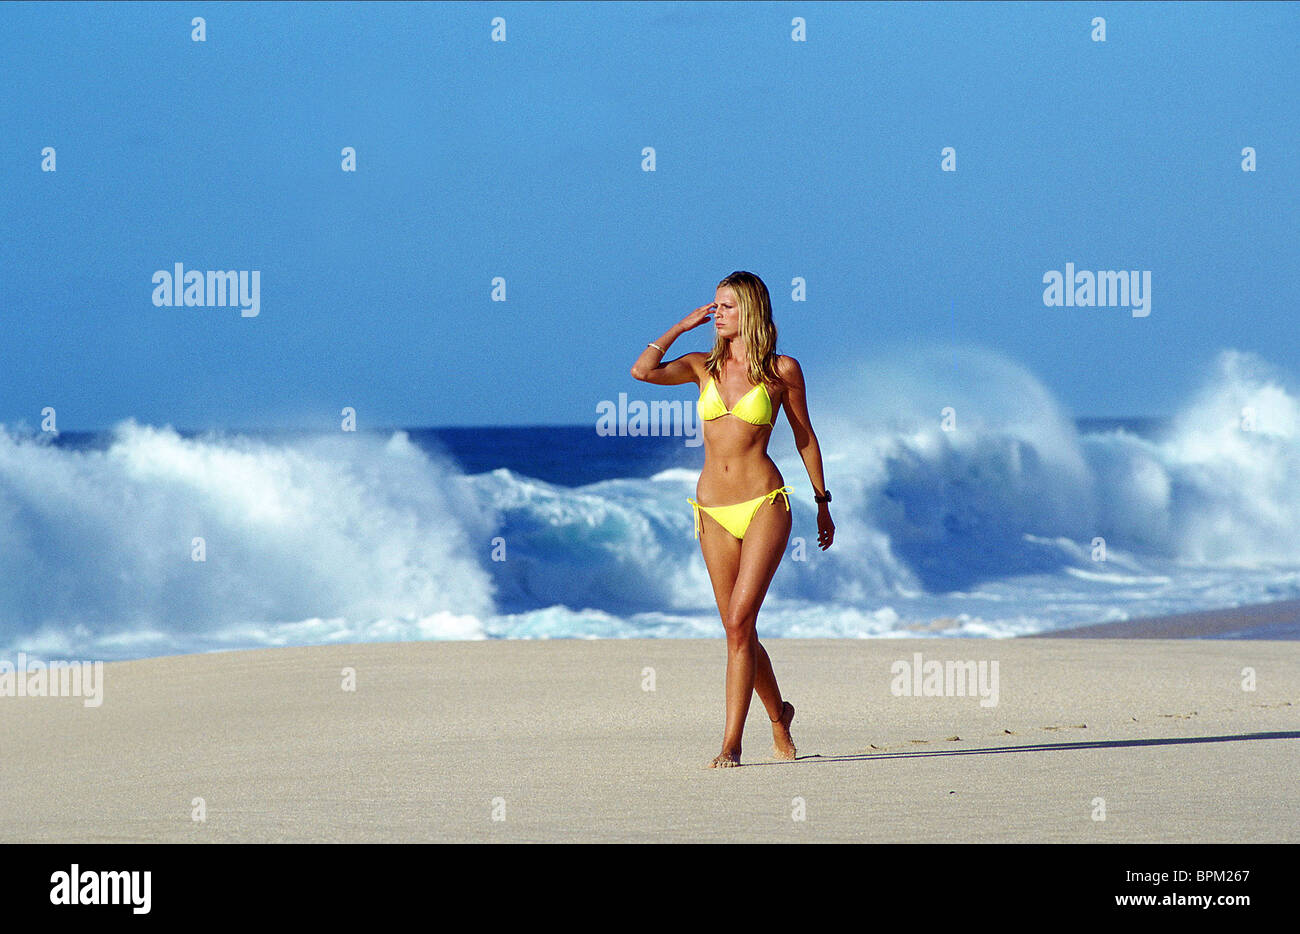 Sara canning bikini